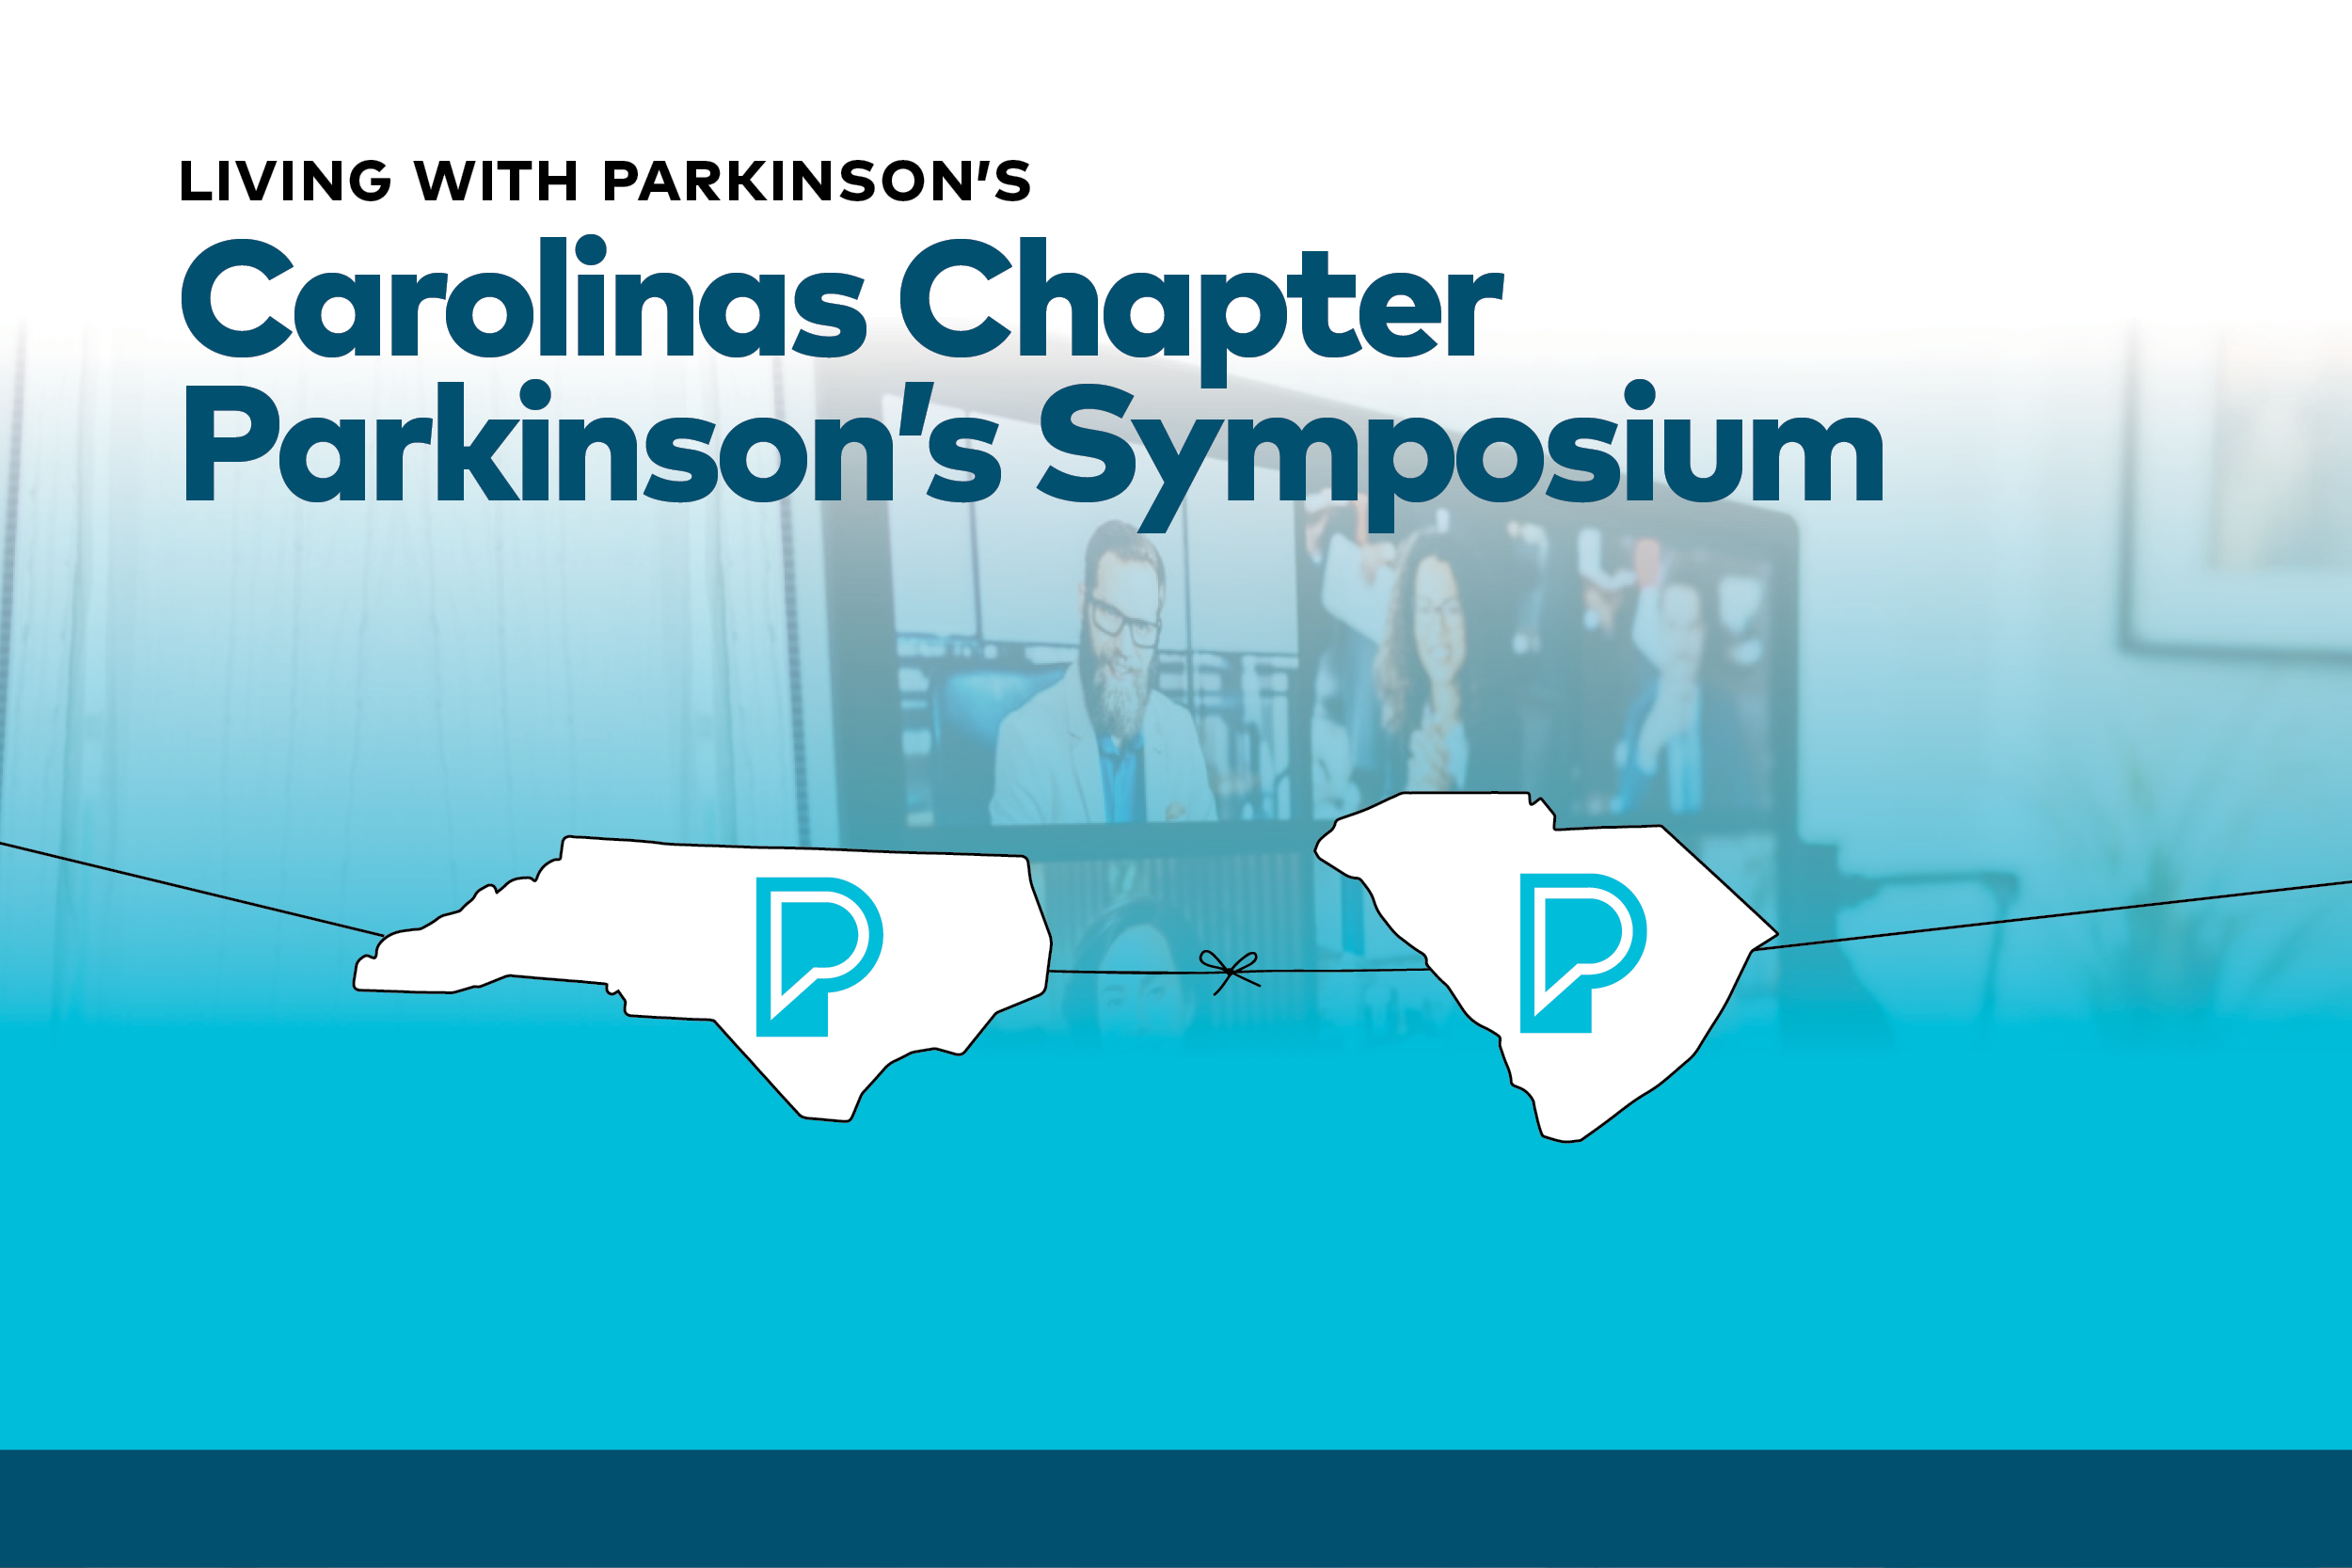 Carolinas Chapter Symposium